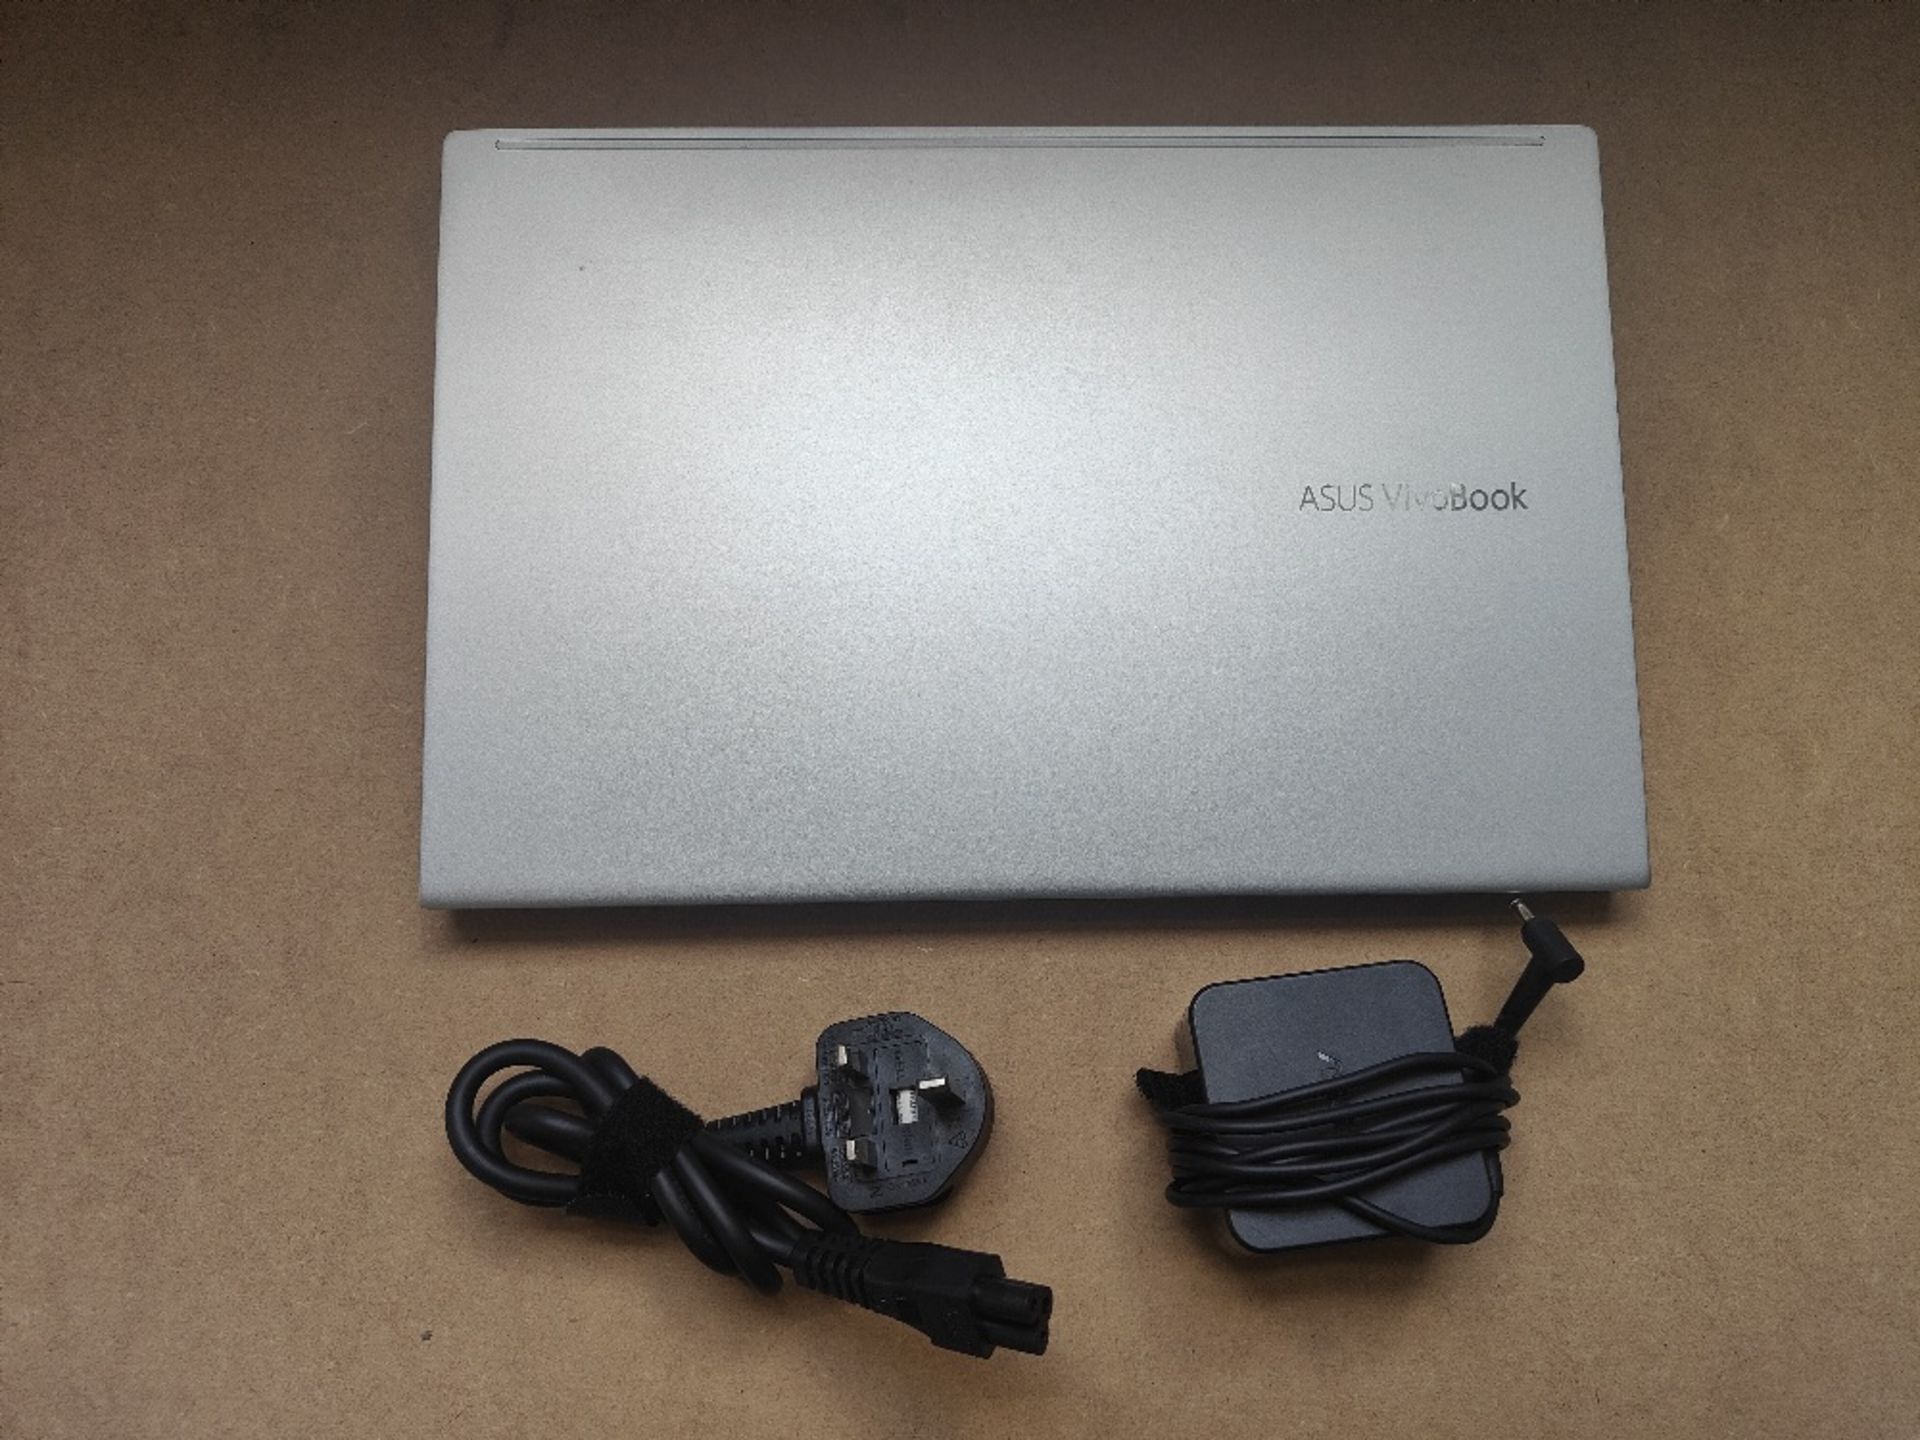 Asus VivoBook S413E Laptop (2021) - Intel i7 11th Gen - Image 4 of 5